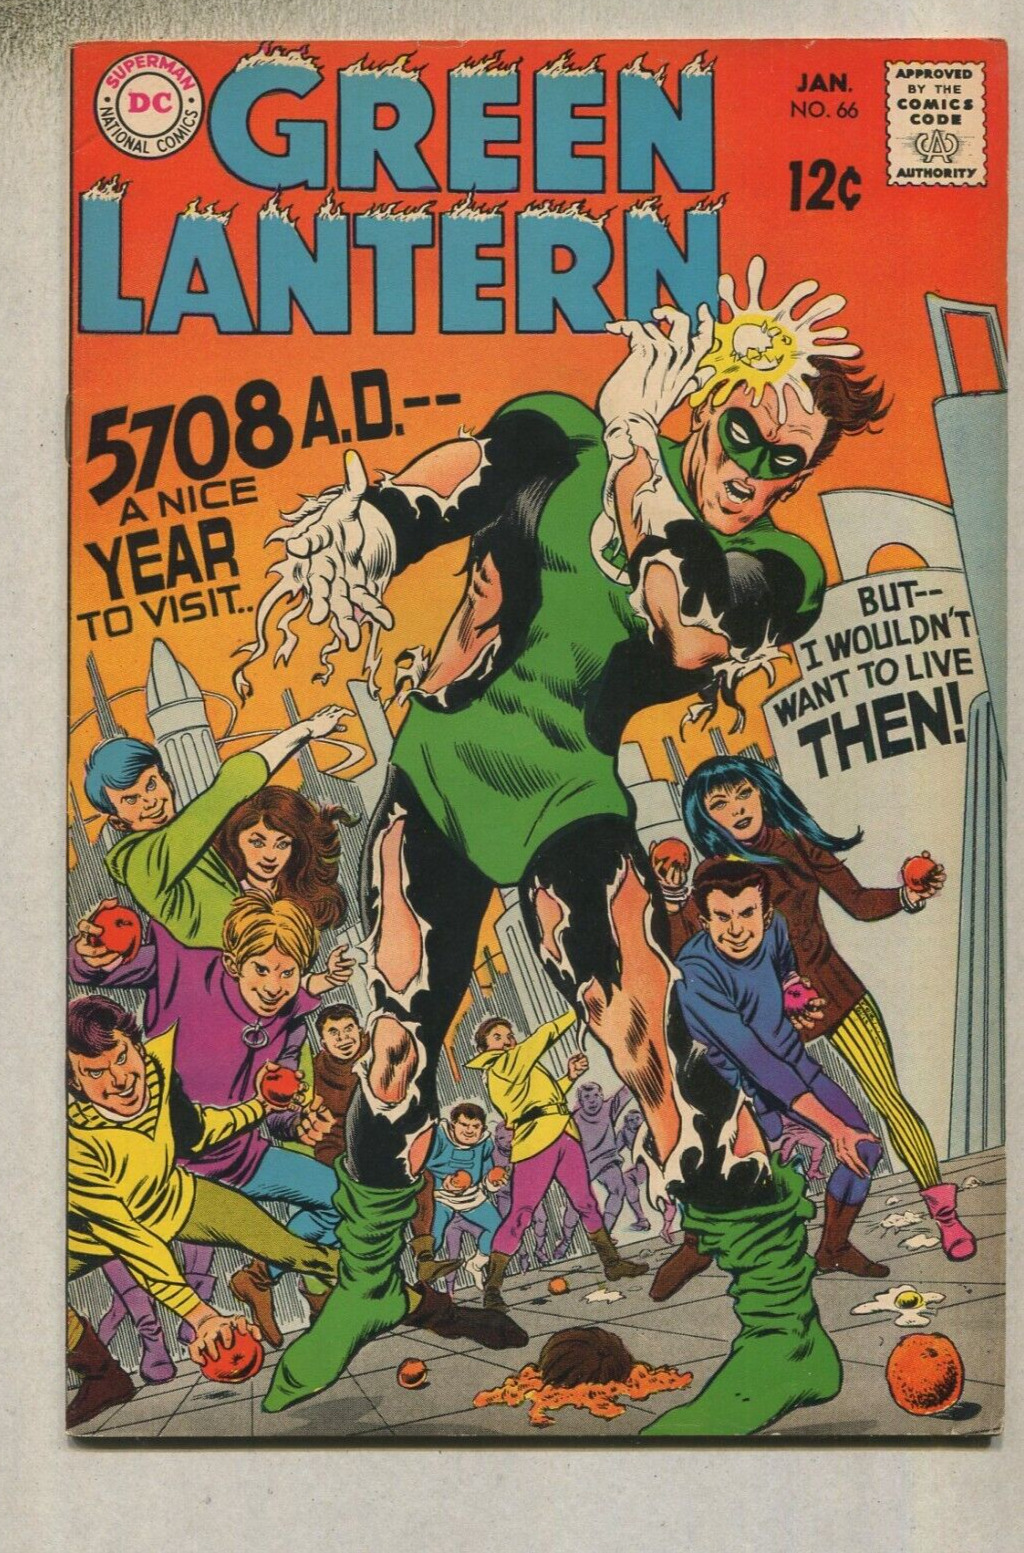 Green Lantern: #66 VF- 5708 A.D. A Nice Year To Visit   DC Comics  D1